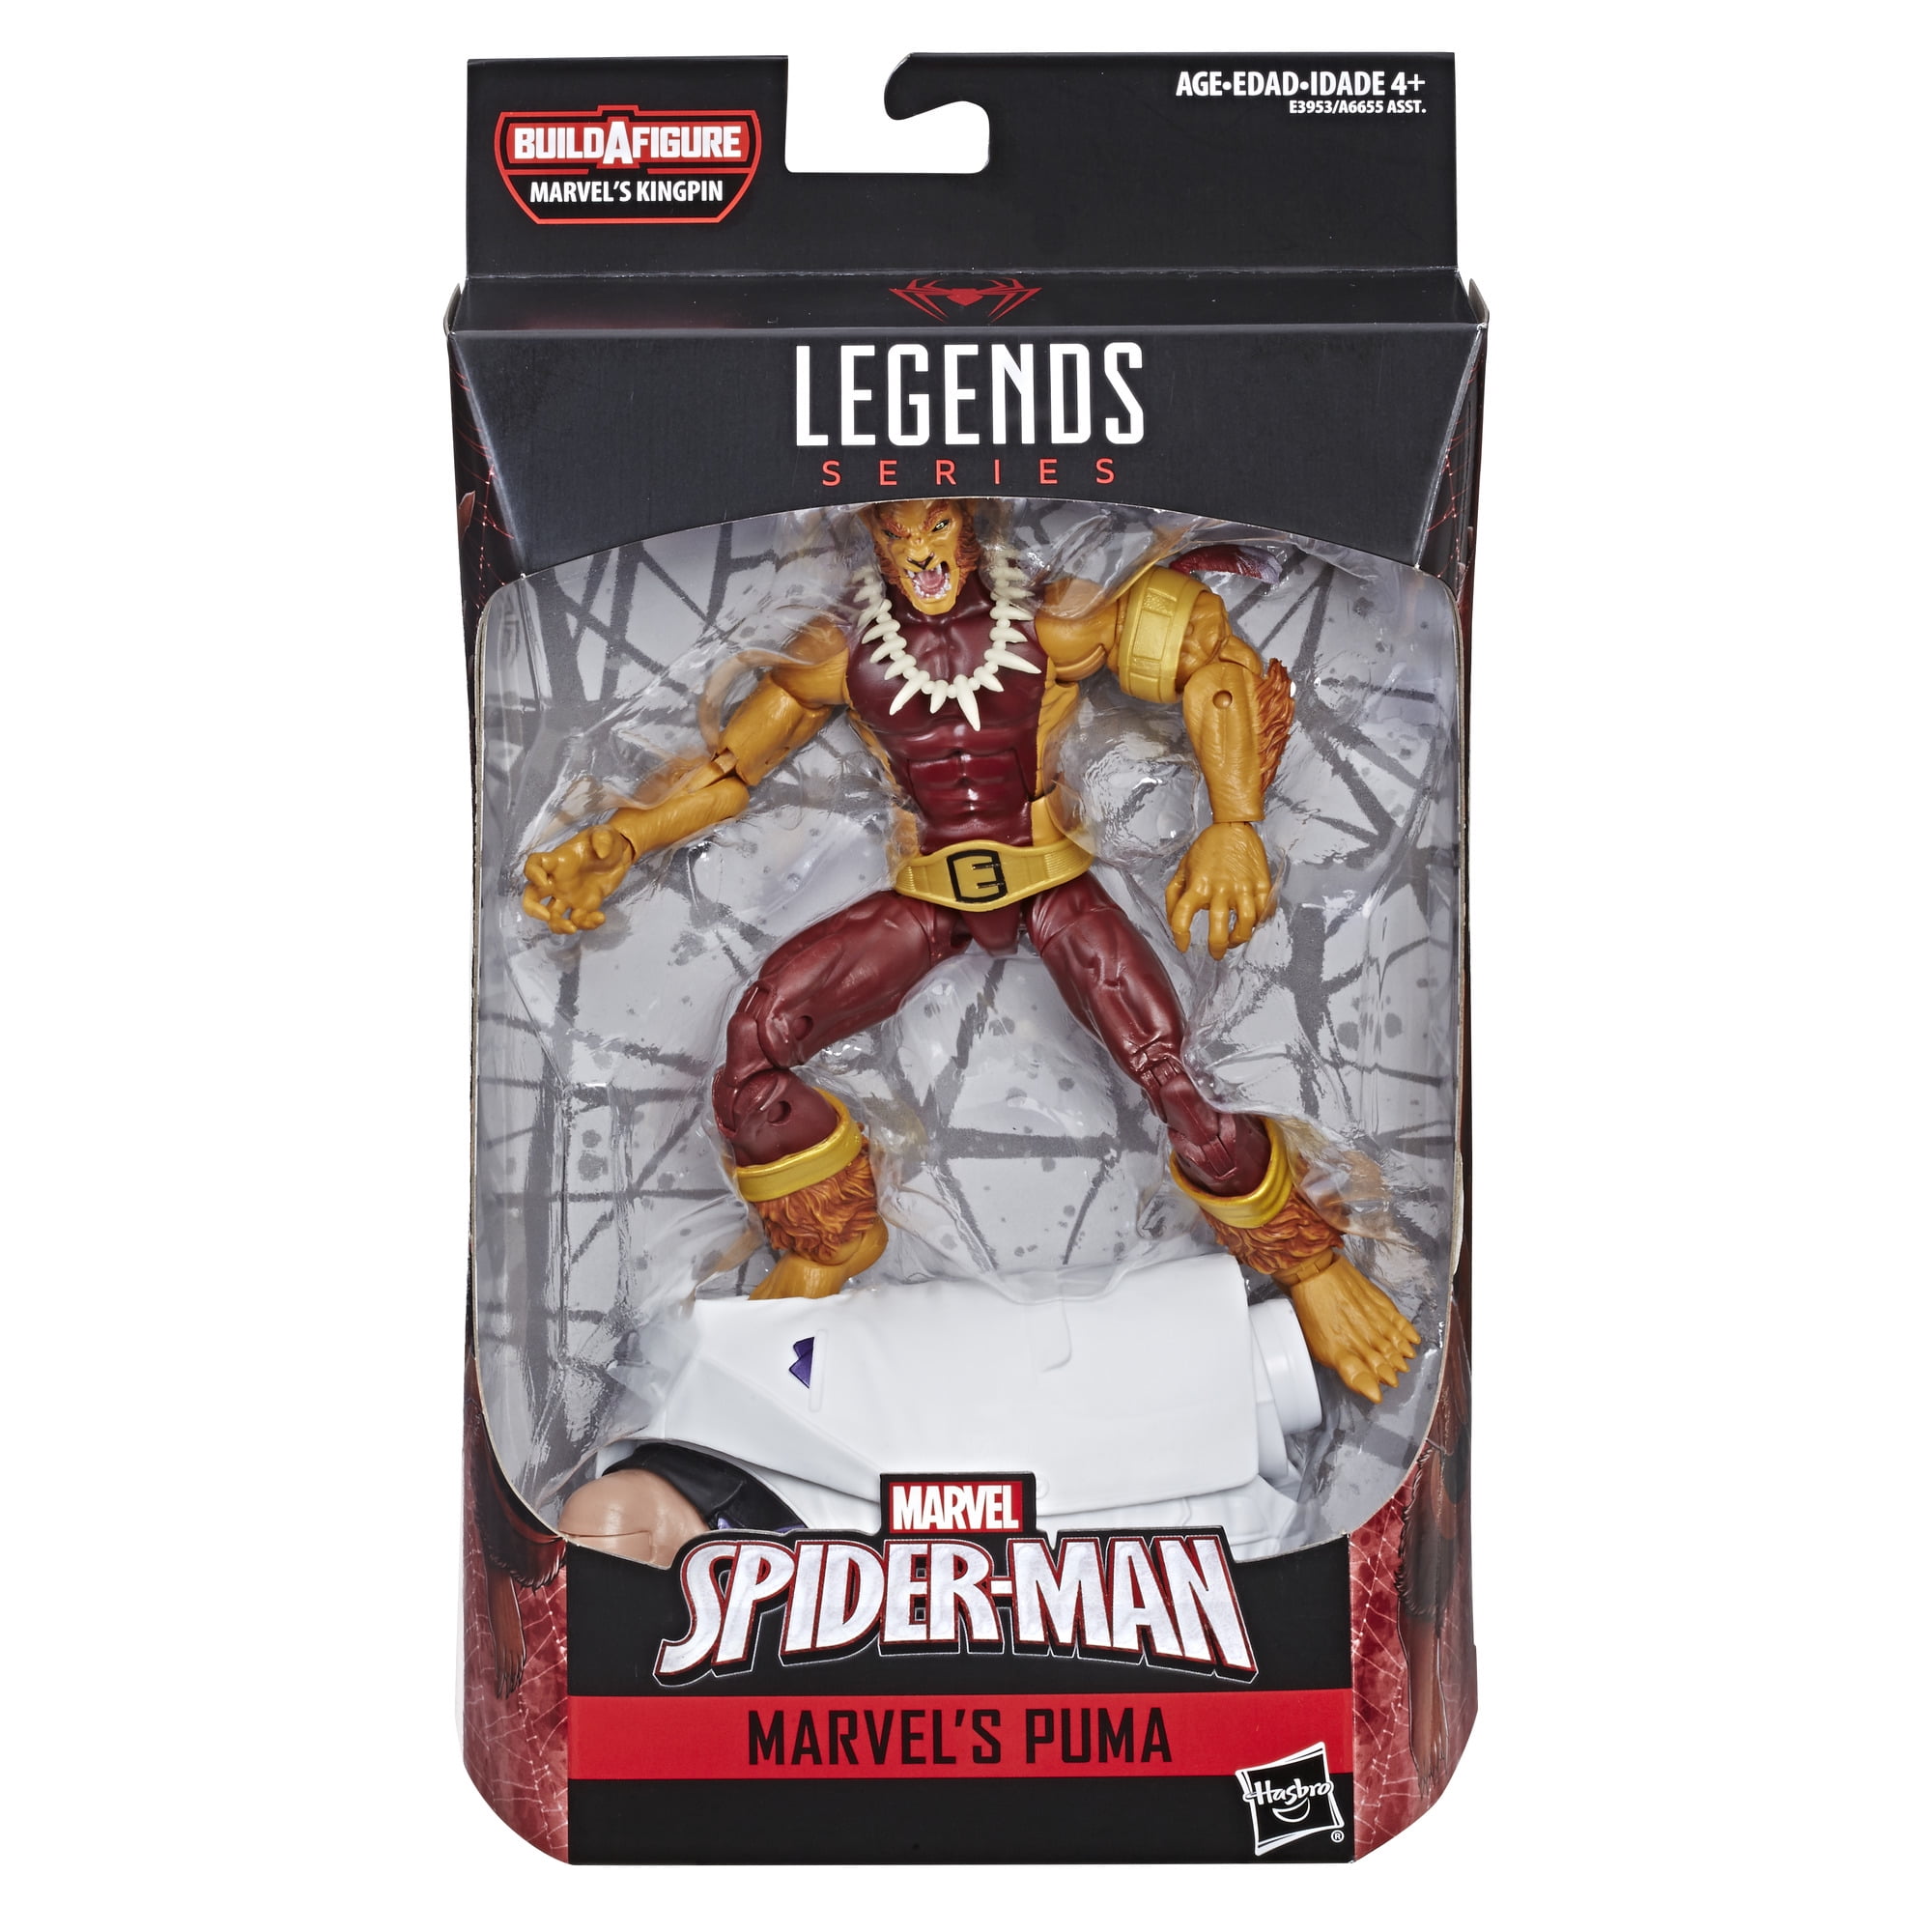 Amarillento Desarmamiento riesgo Spider-Man Legends Series 6-inch Marvel's Puma, Ages 4 and Up - Walmart.com